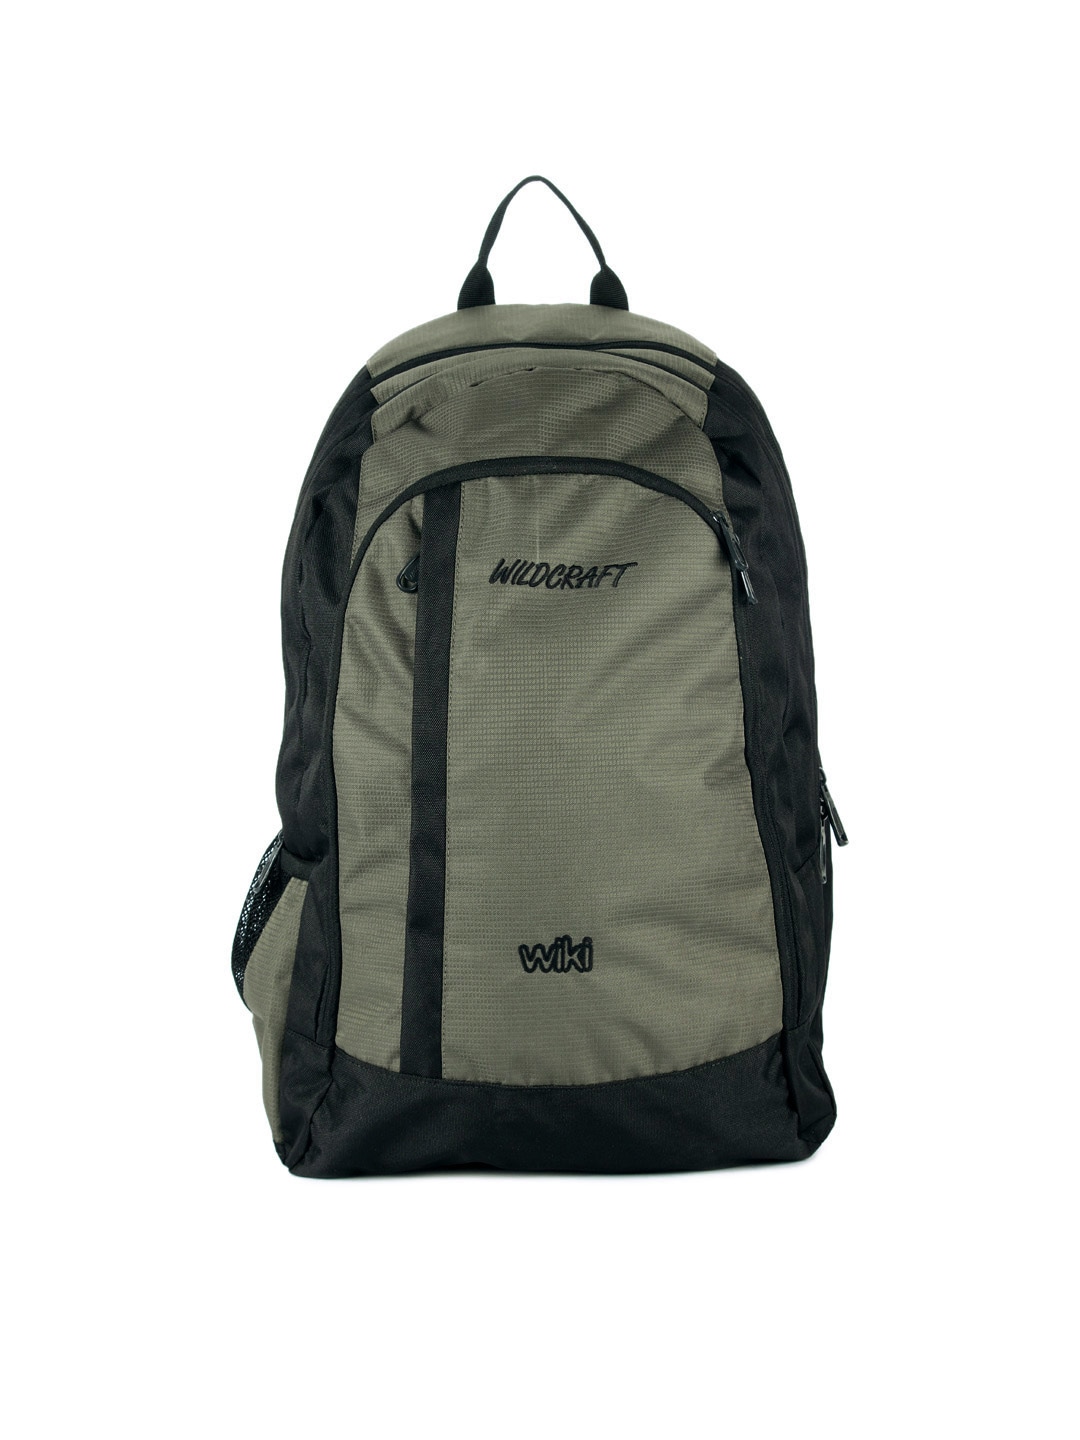 Wildcraft Unisex Grey & Black Backpack